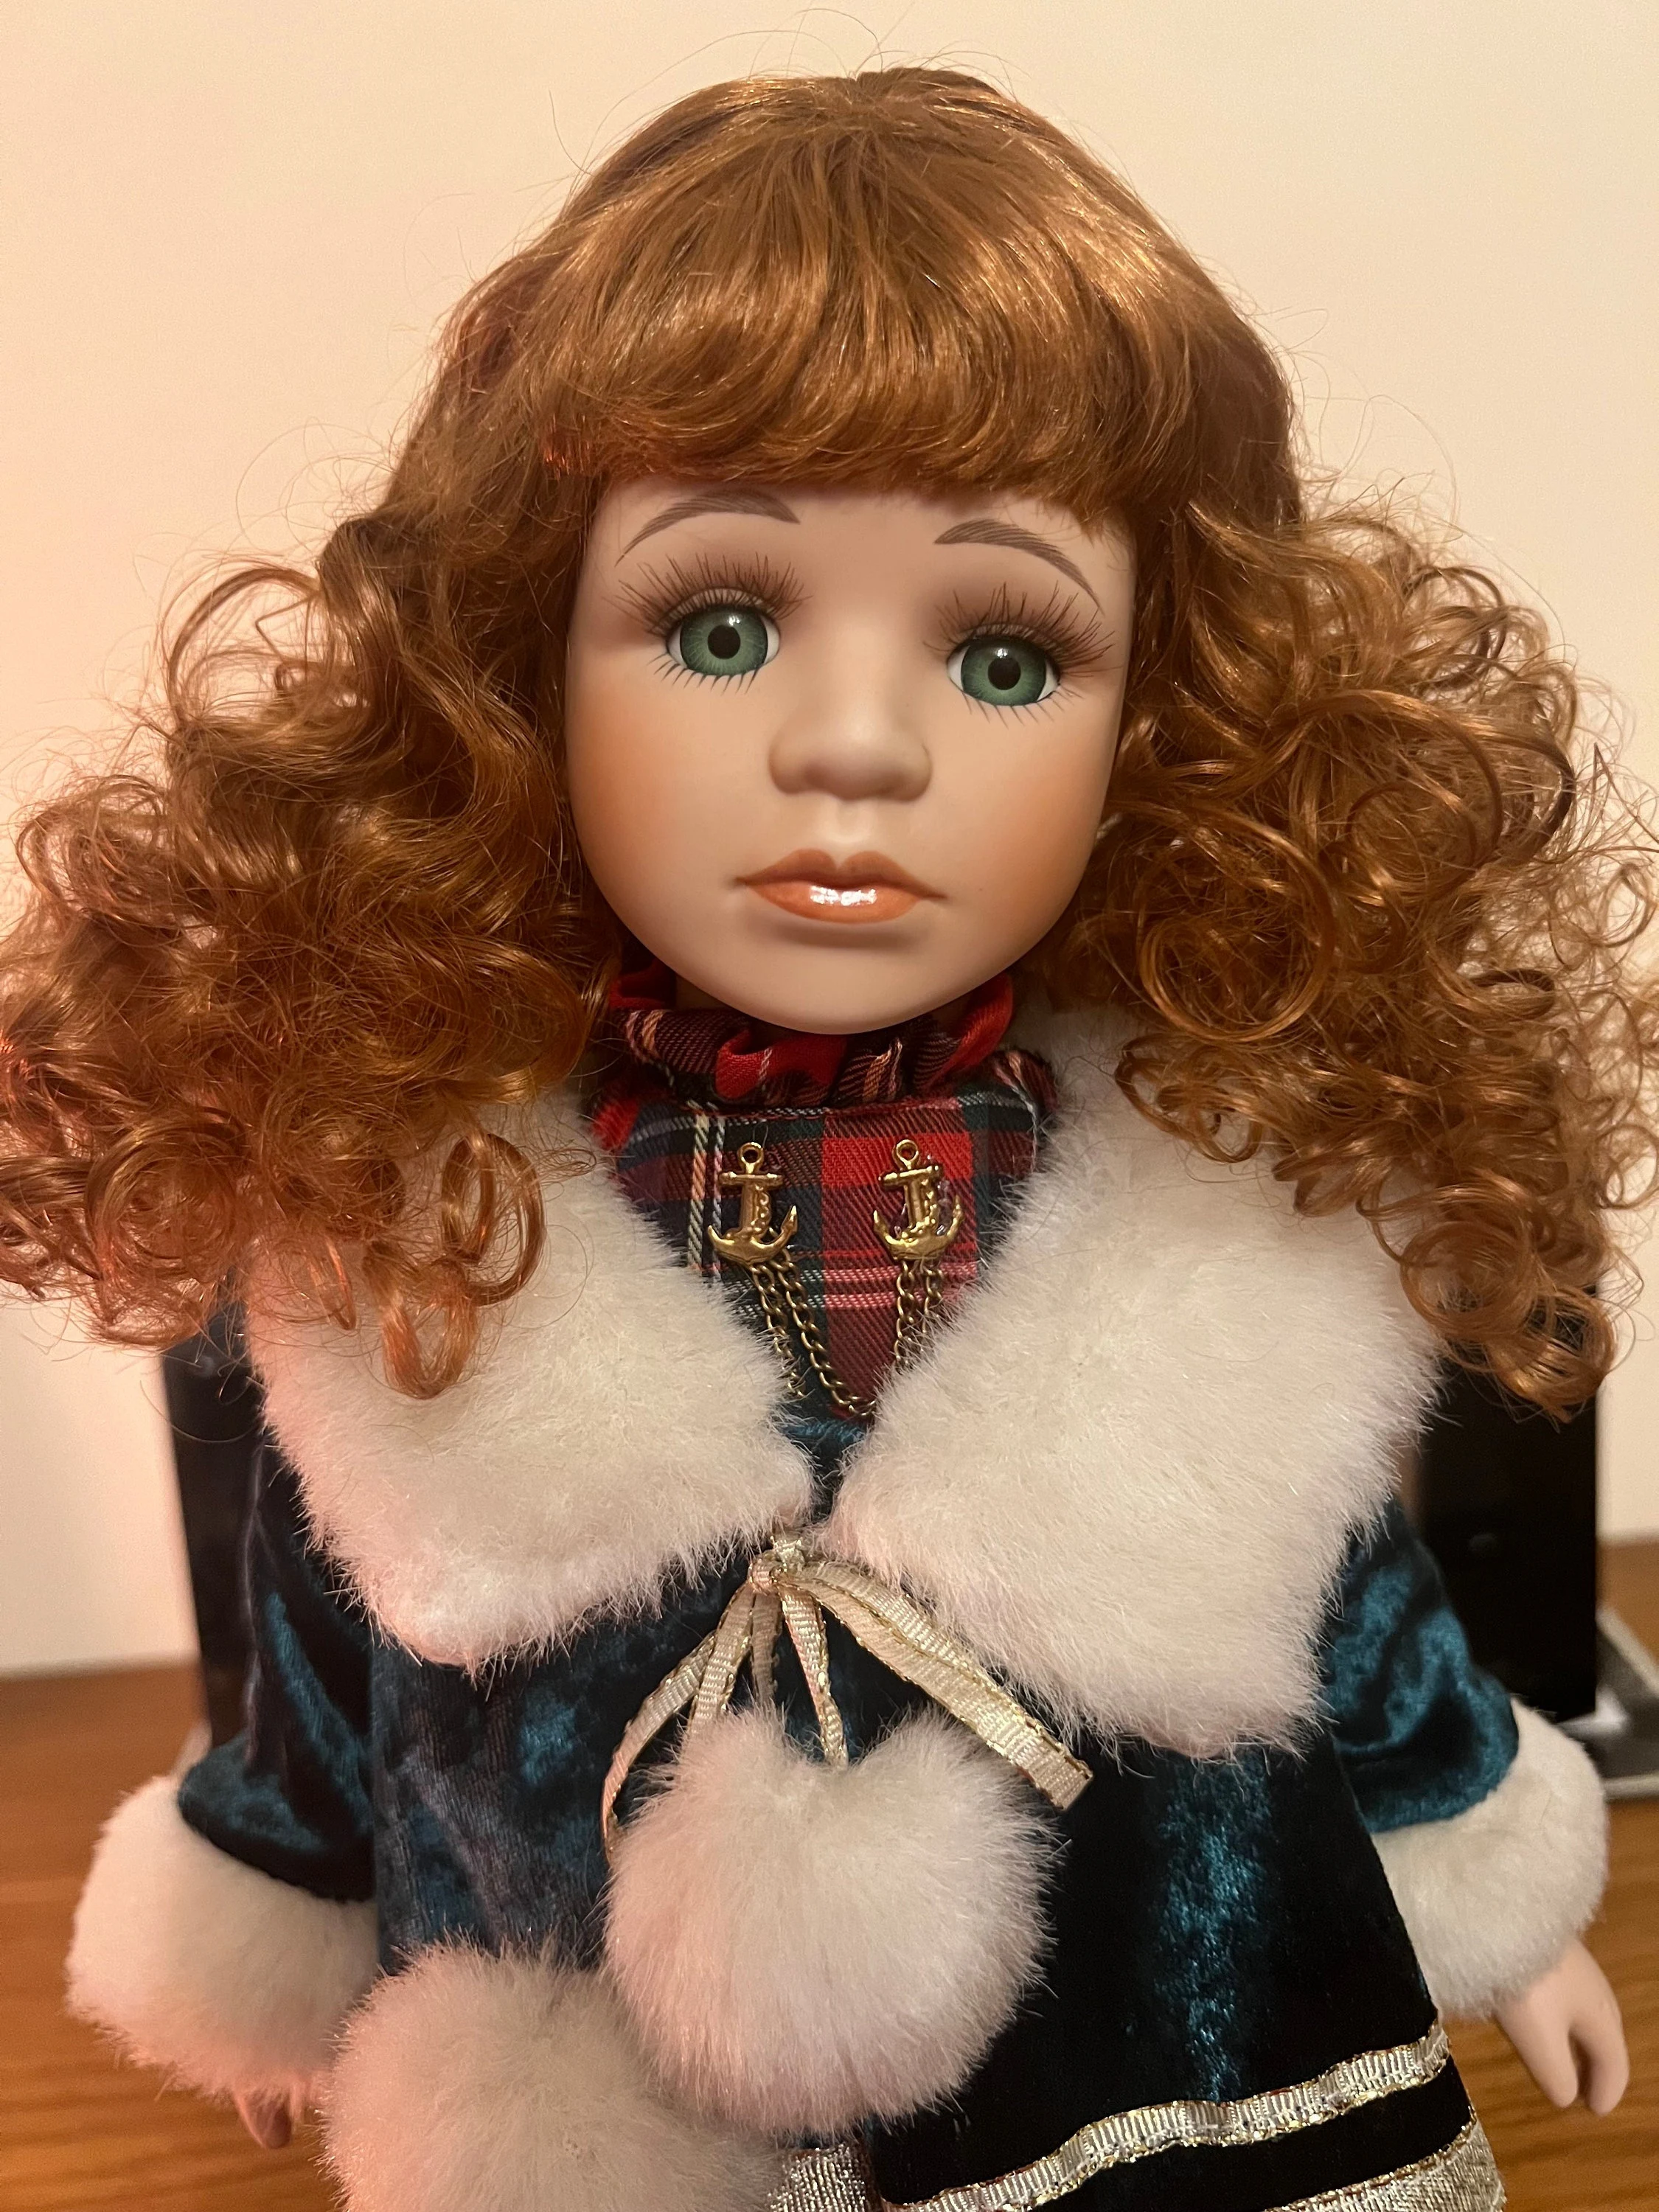 Haunted Vintage Porcelain Doll - Female Scottish Vampiric Fae Spirit - $315.95